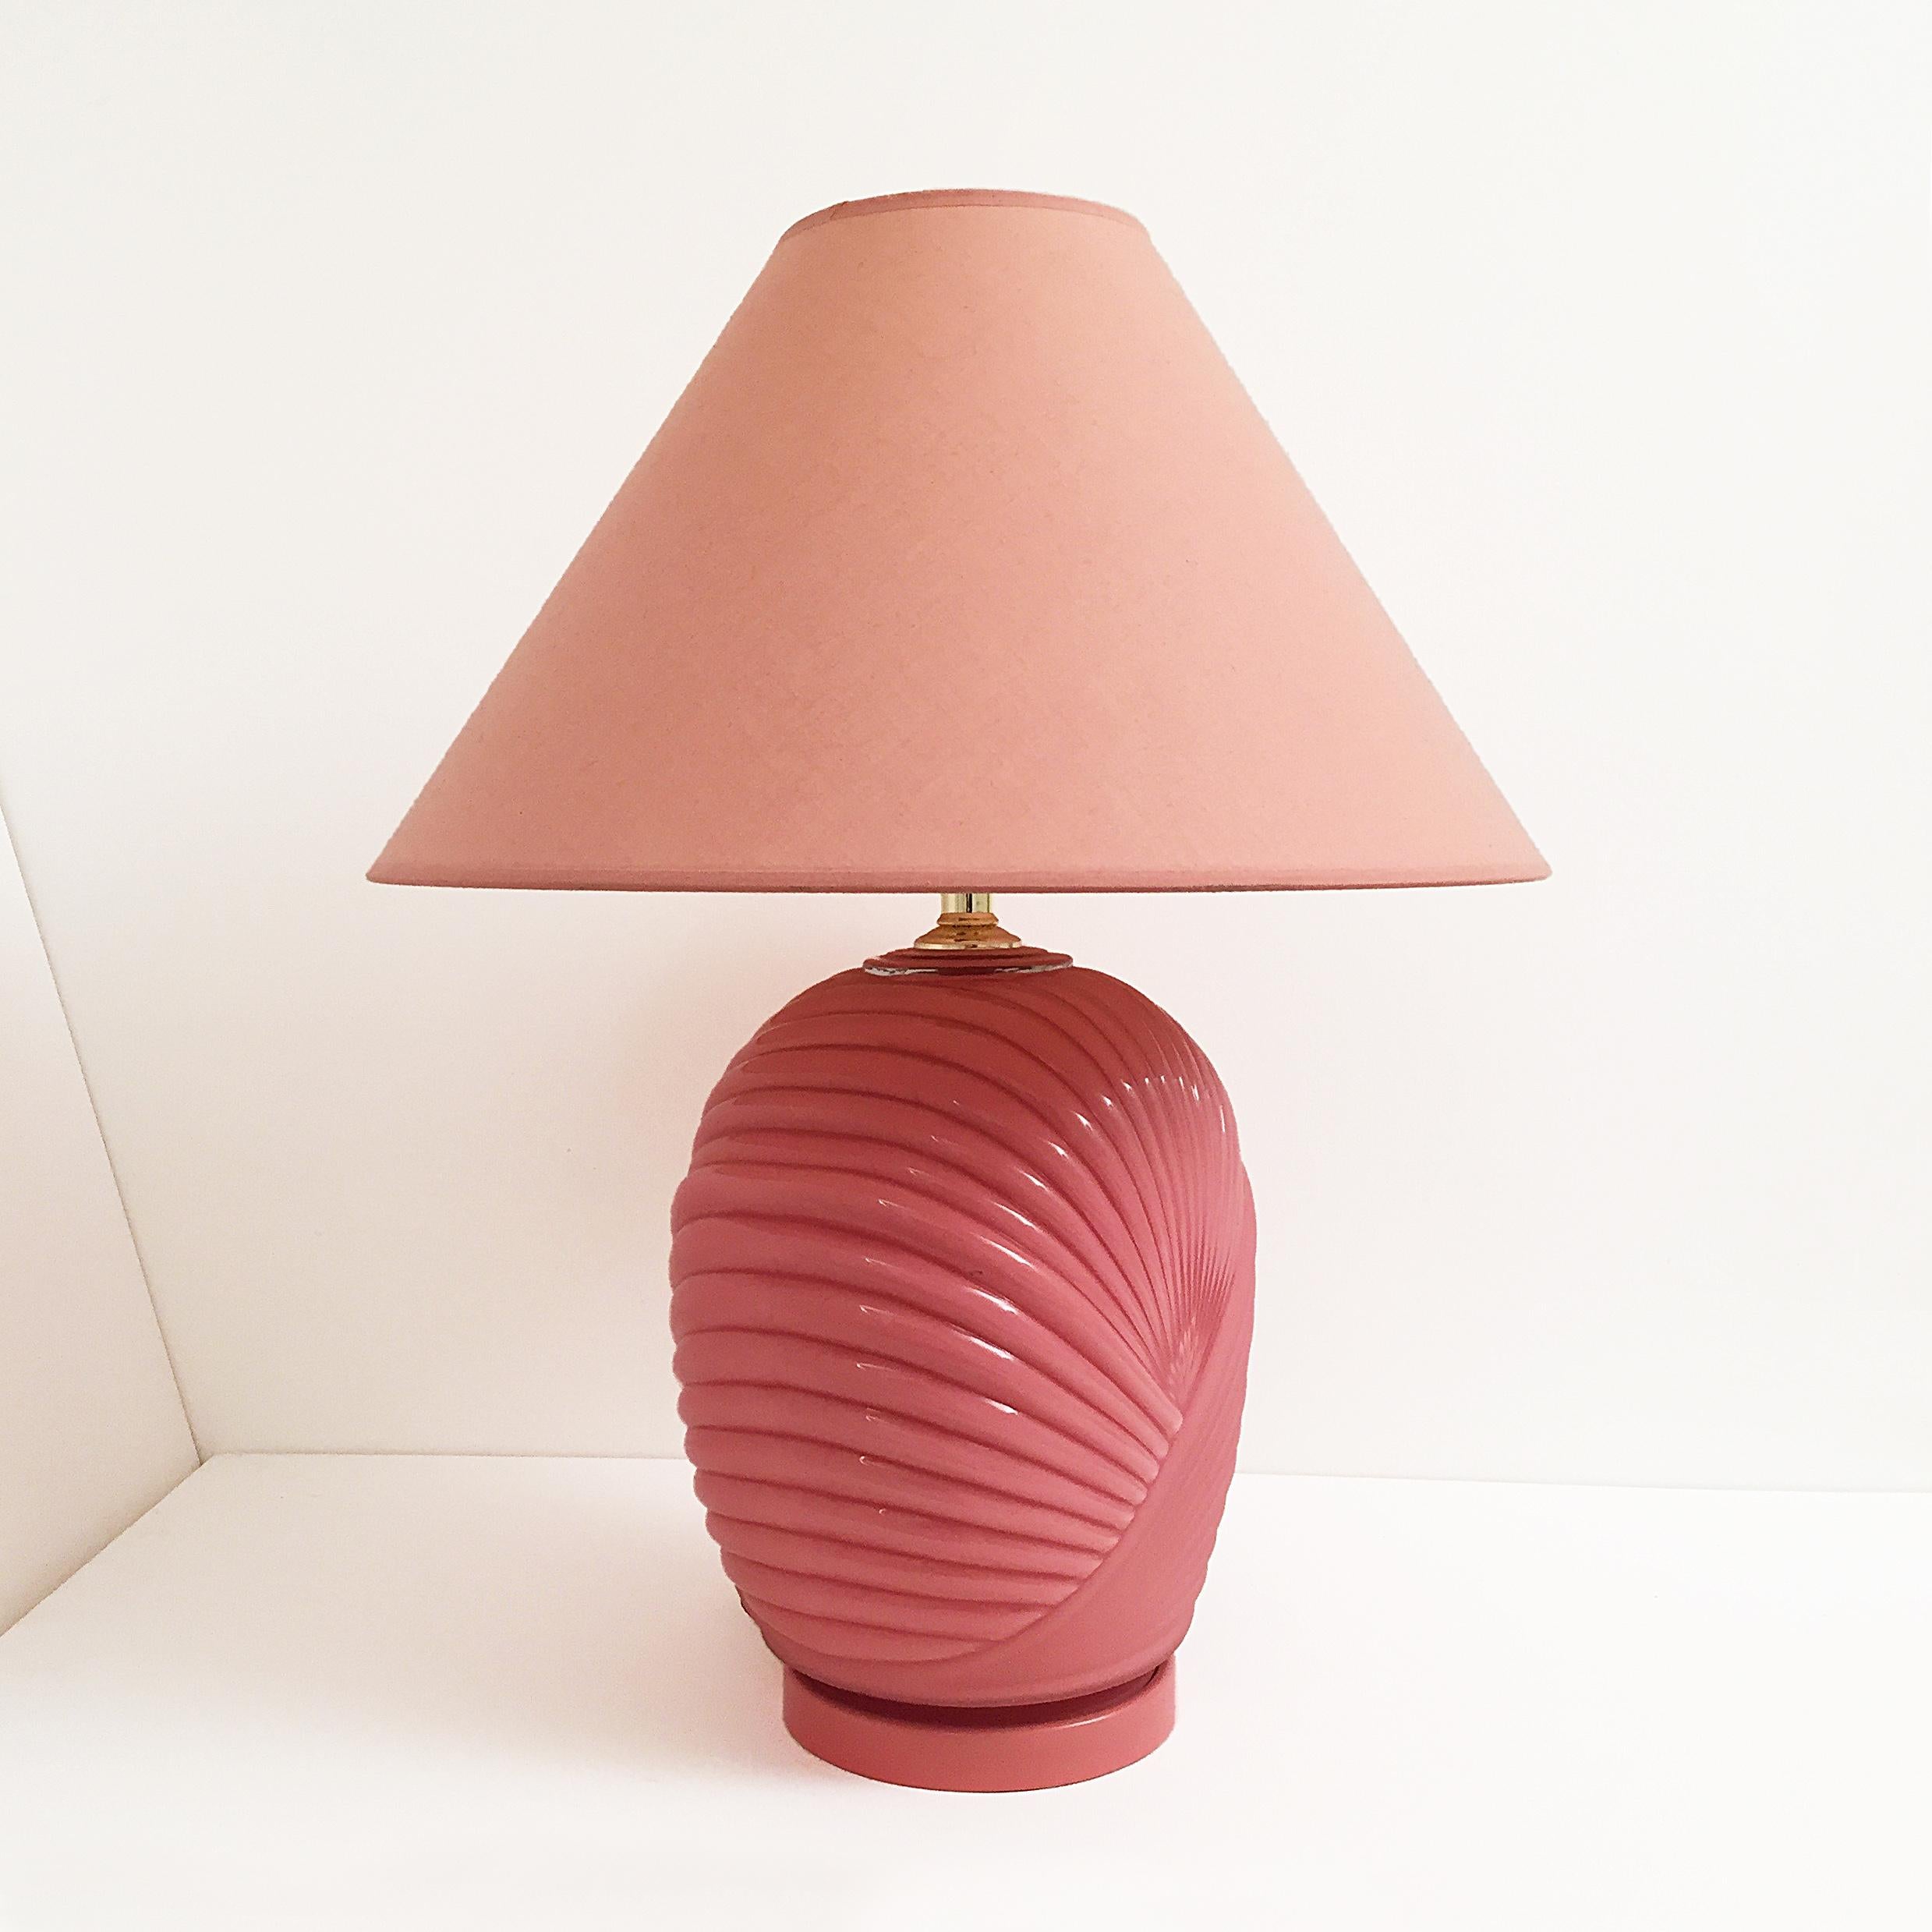 1980's lamp